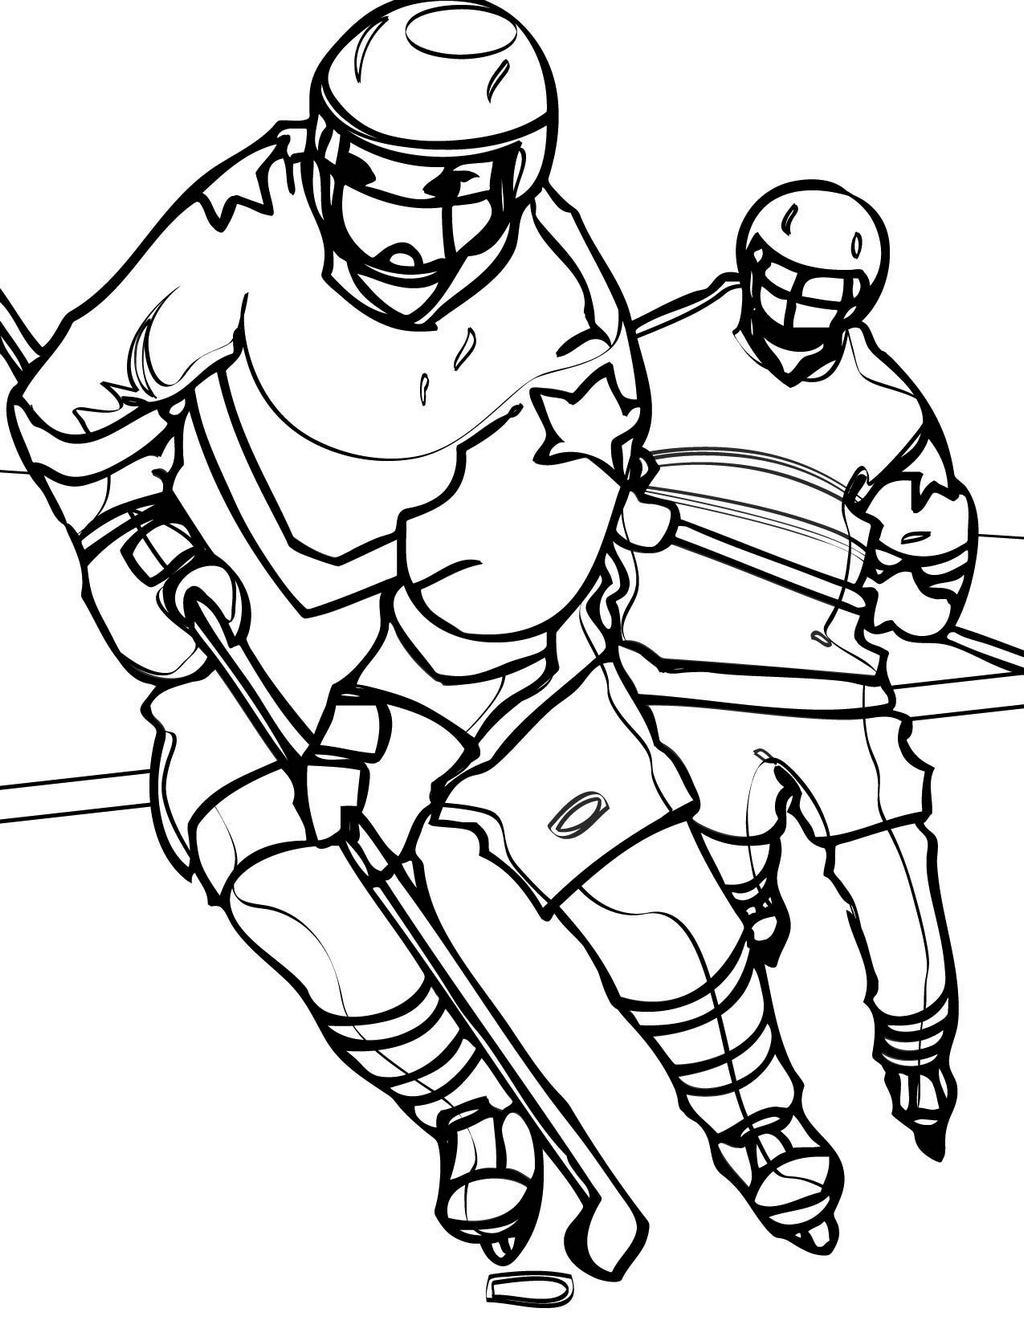 hockey jersey and uniform coloring sheet